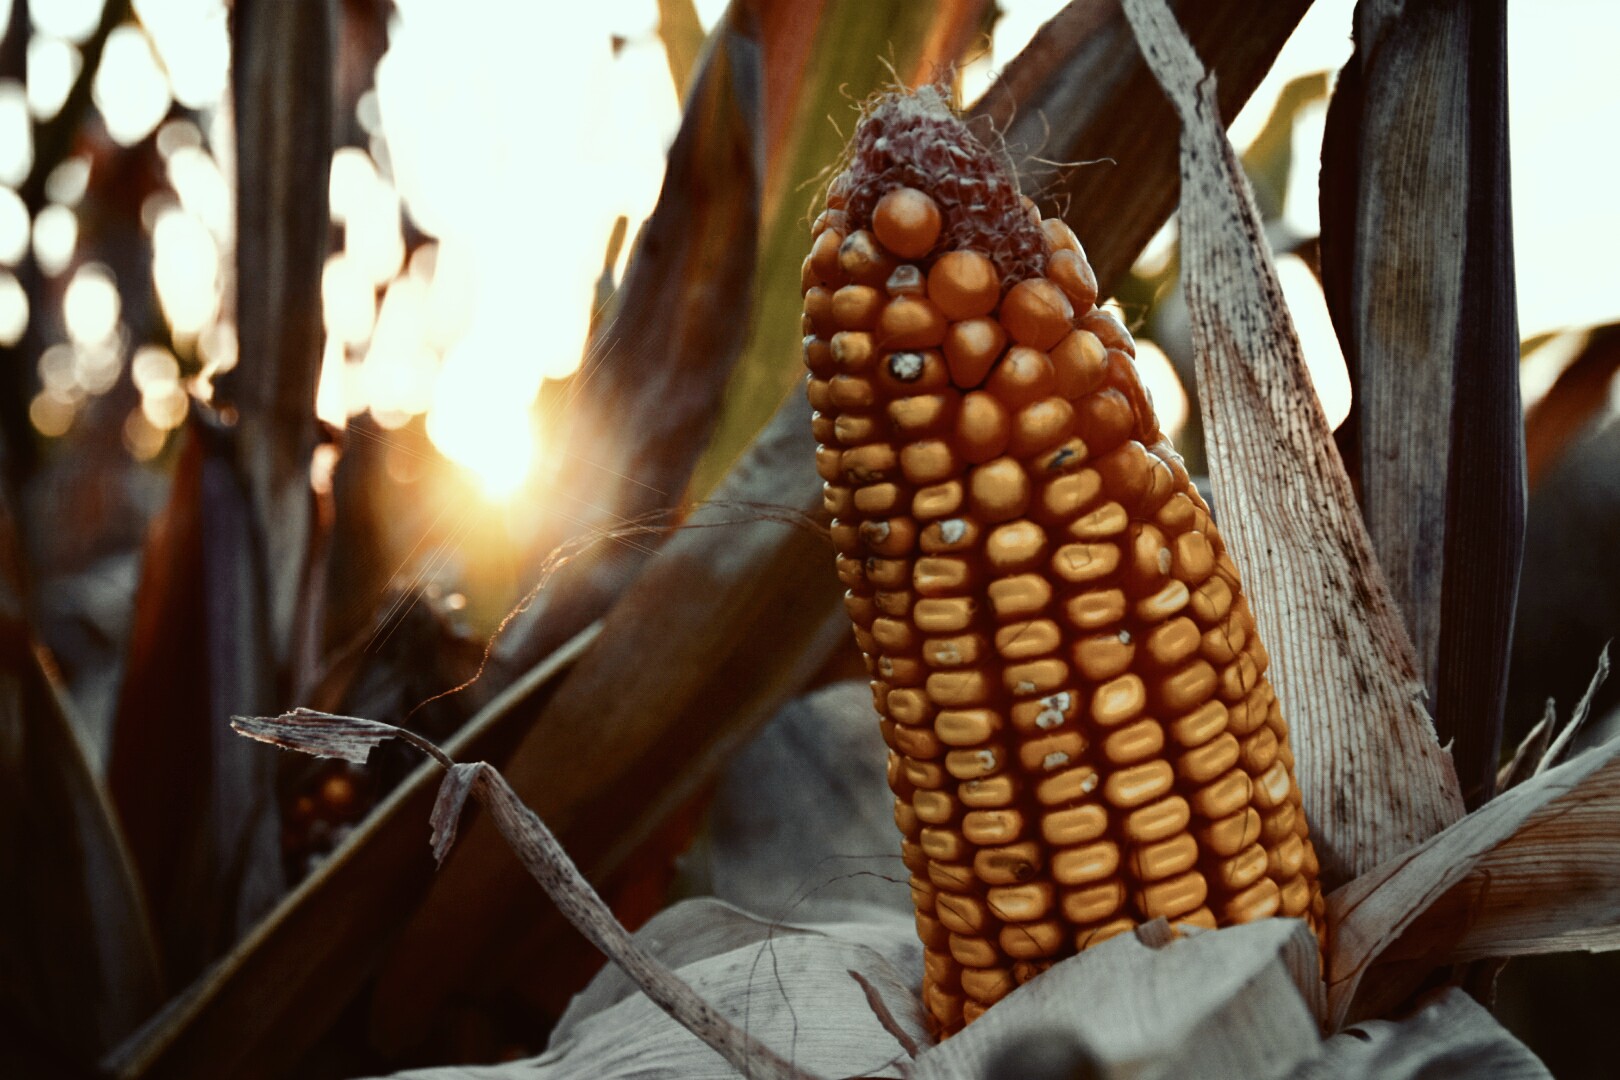 Pd: “Salvaguardare le piccole imprese agricole”